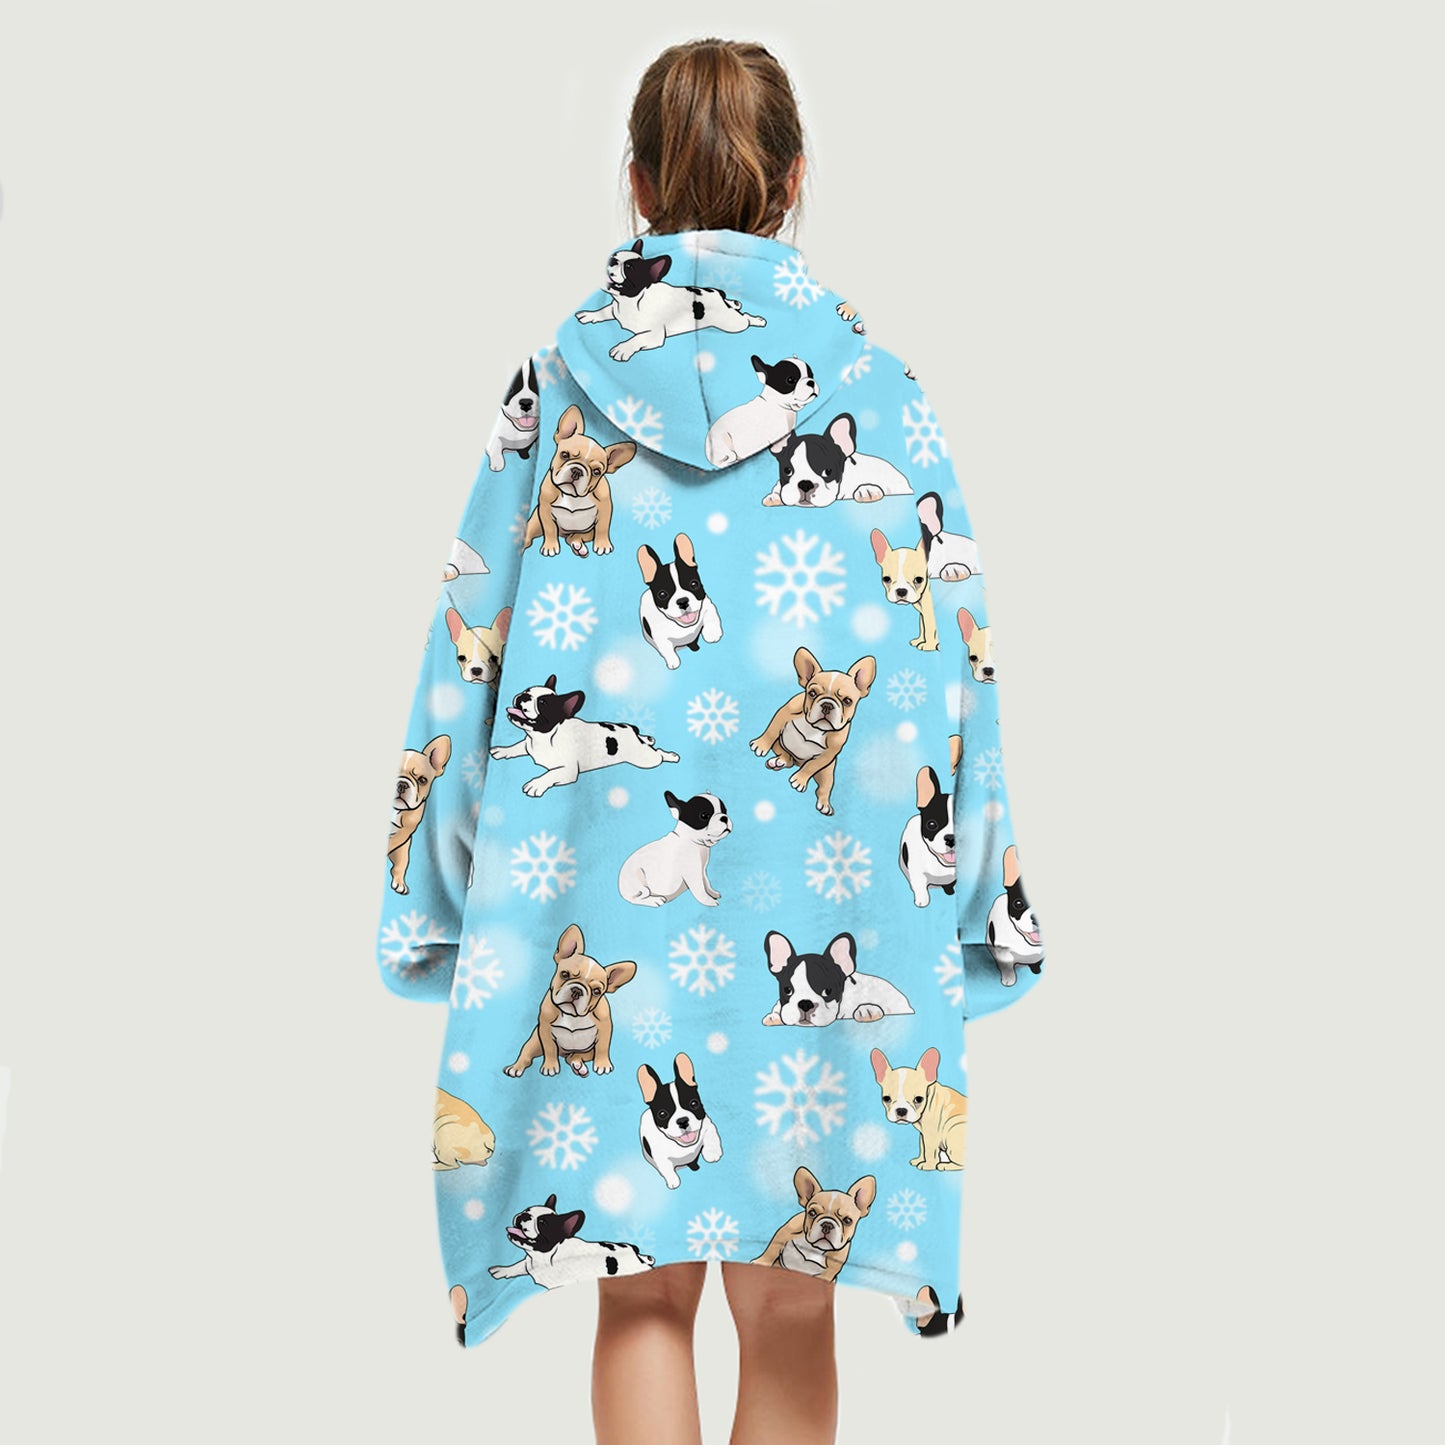 I Love Snows - French Bulldog Fleece Blanket Hoodie